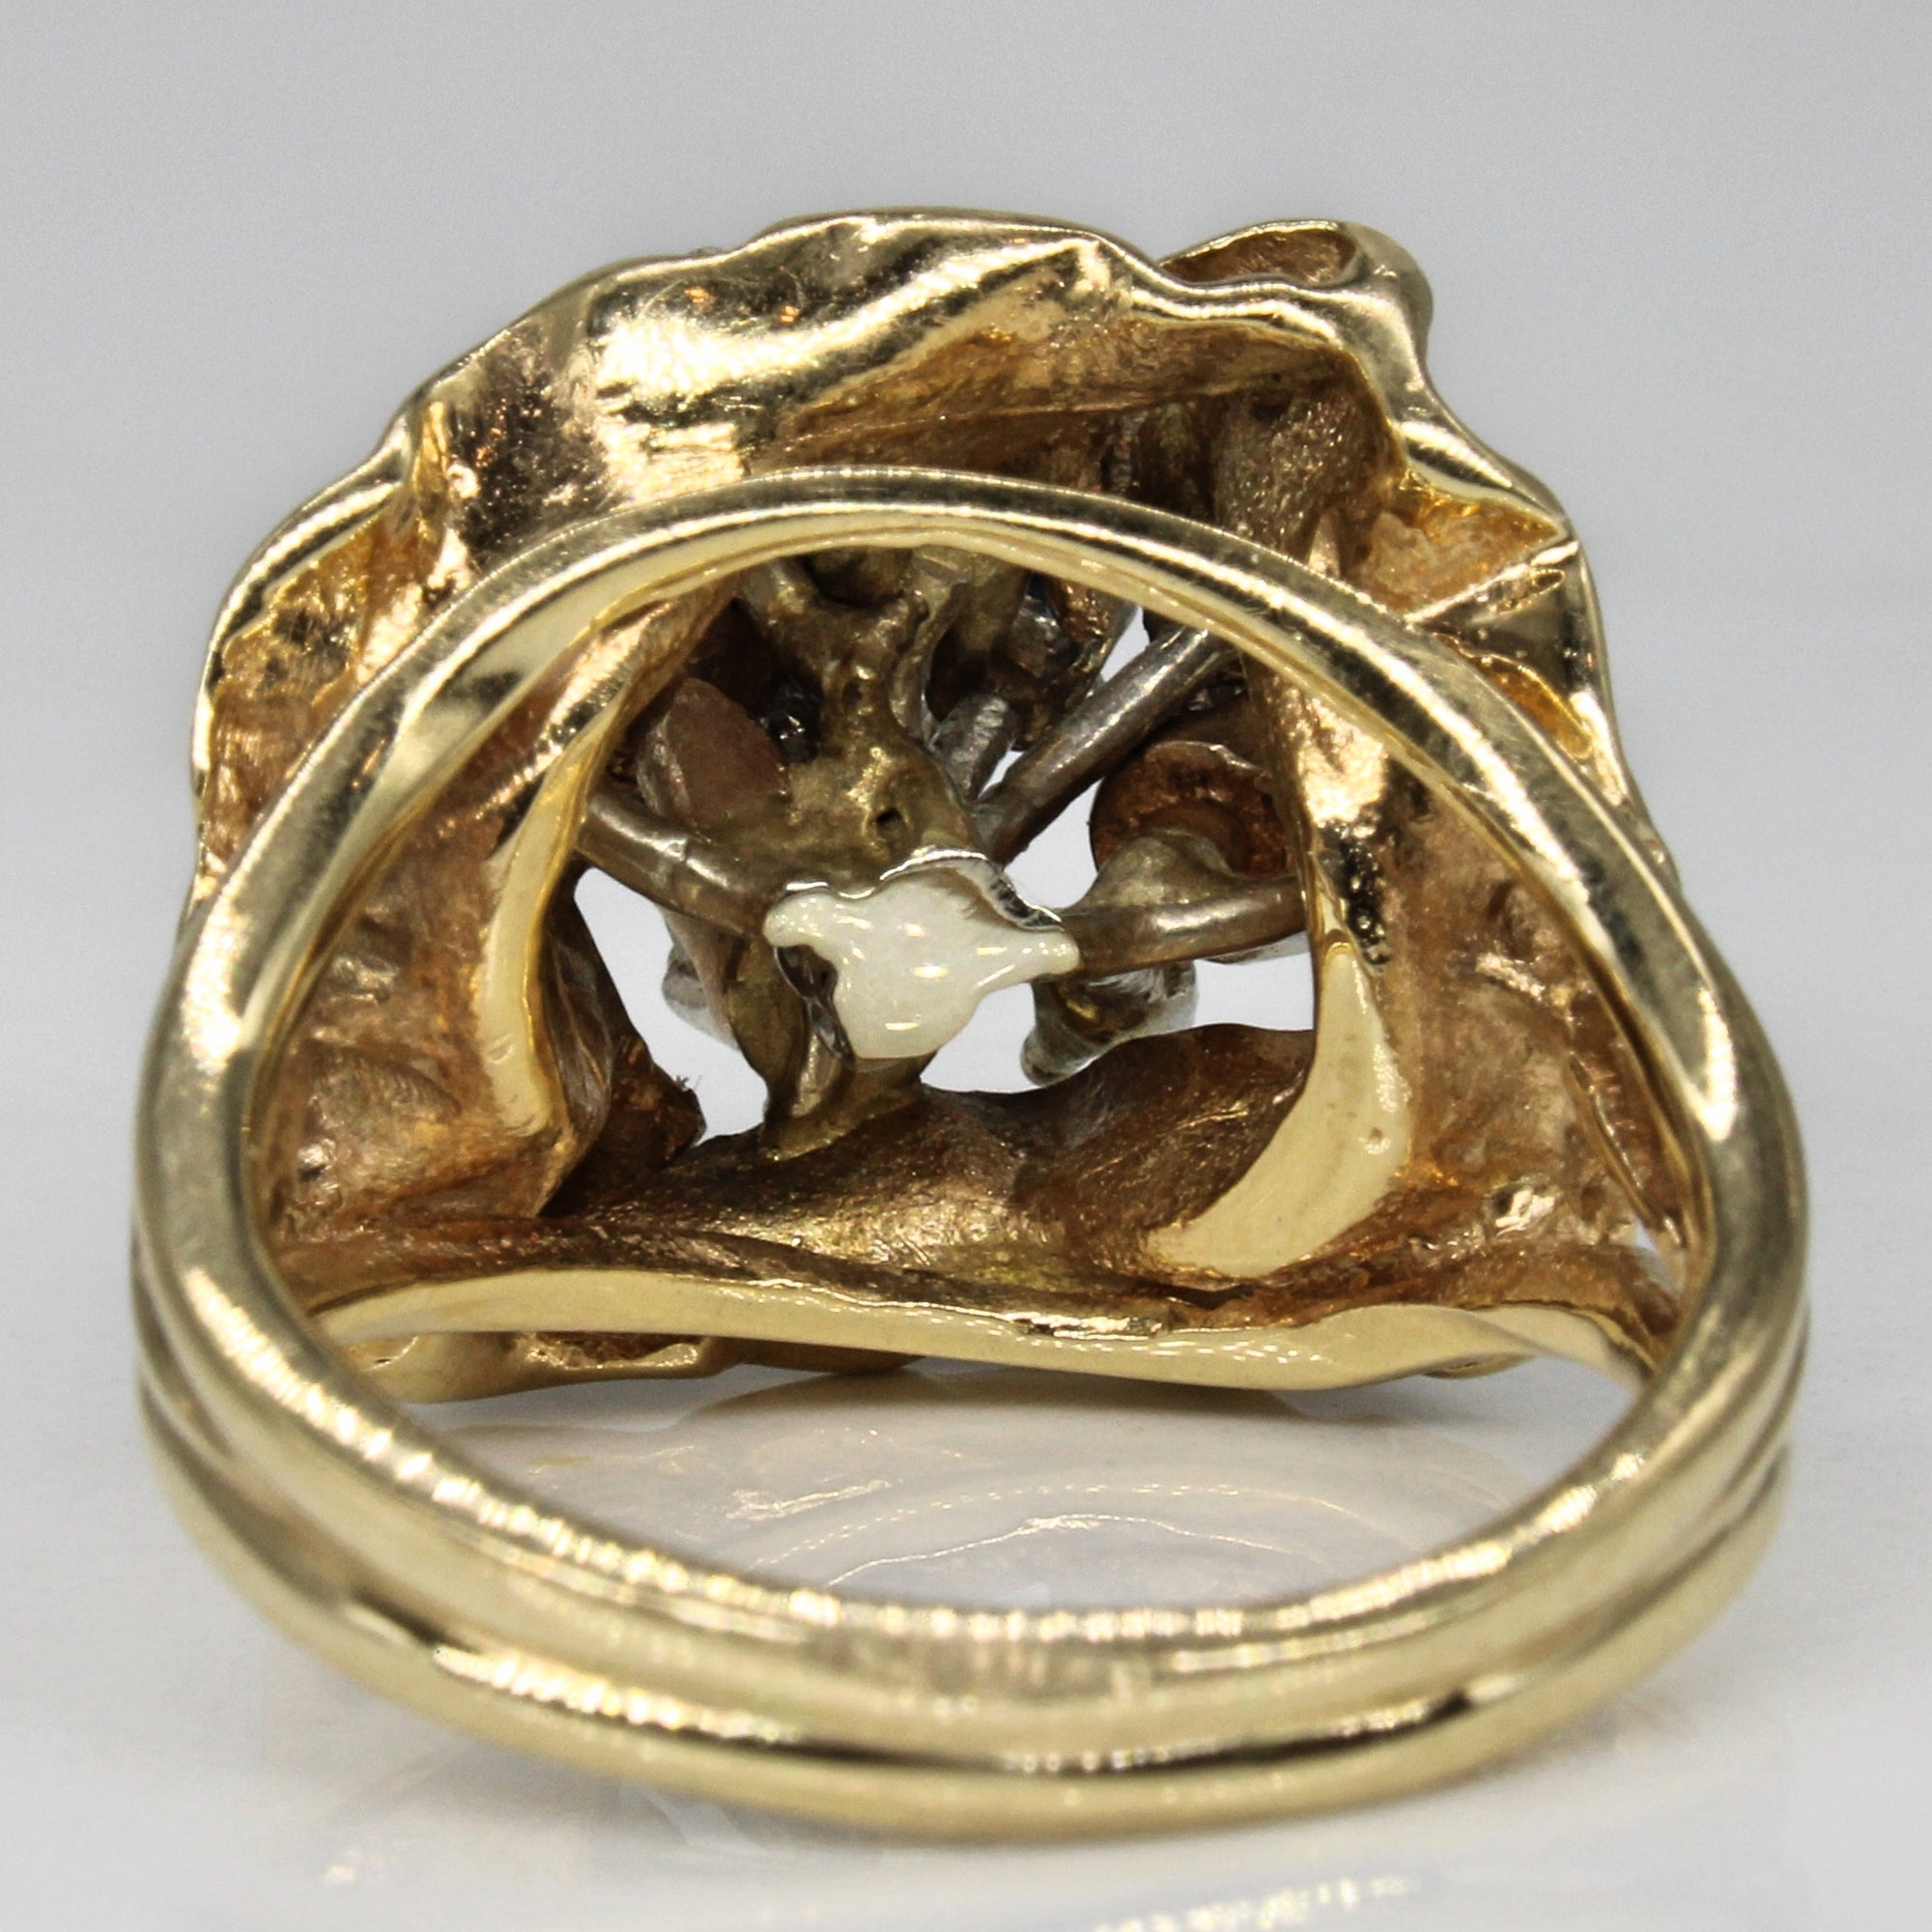 Diamond & Sapphire Cocktail Ring | 1.19ctw, 0.28ctw | SZ 8 |